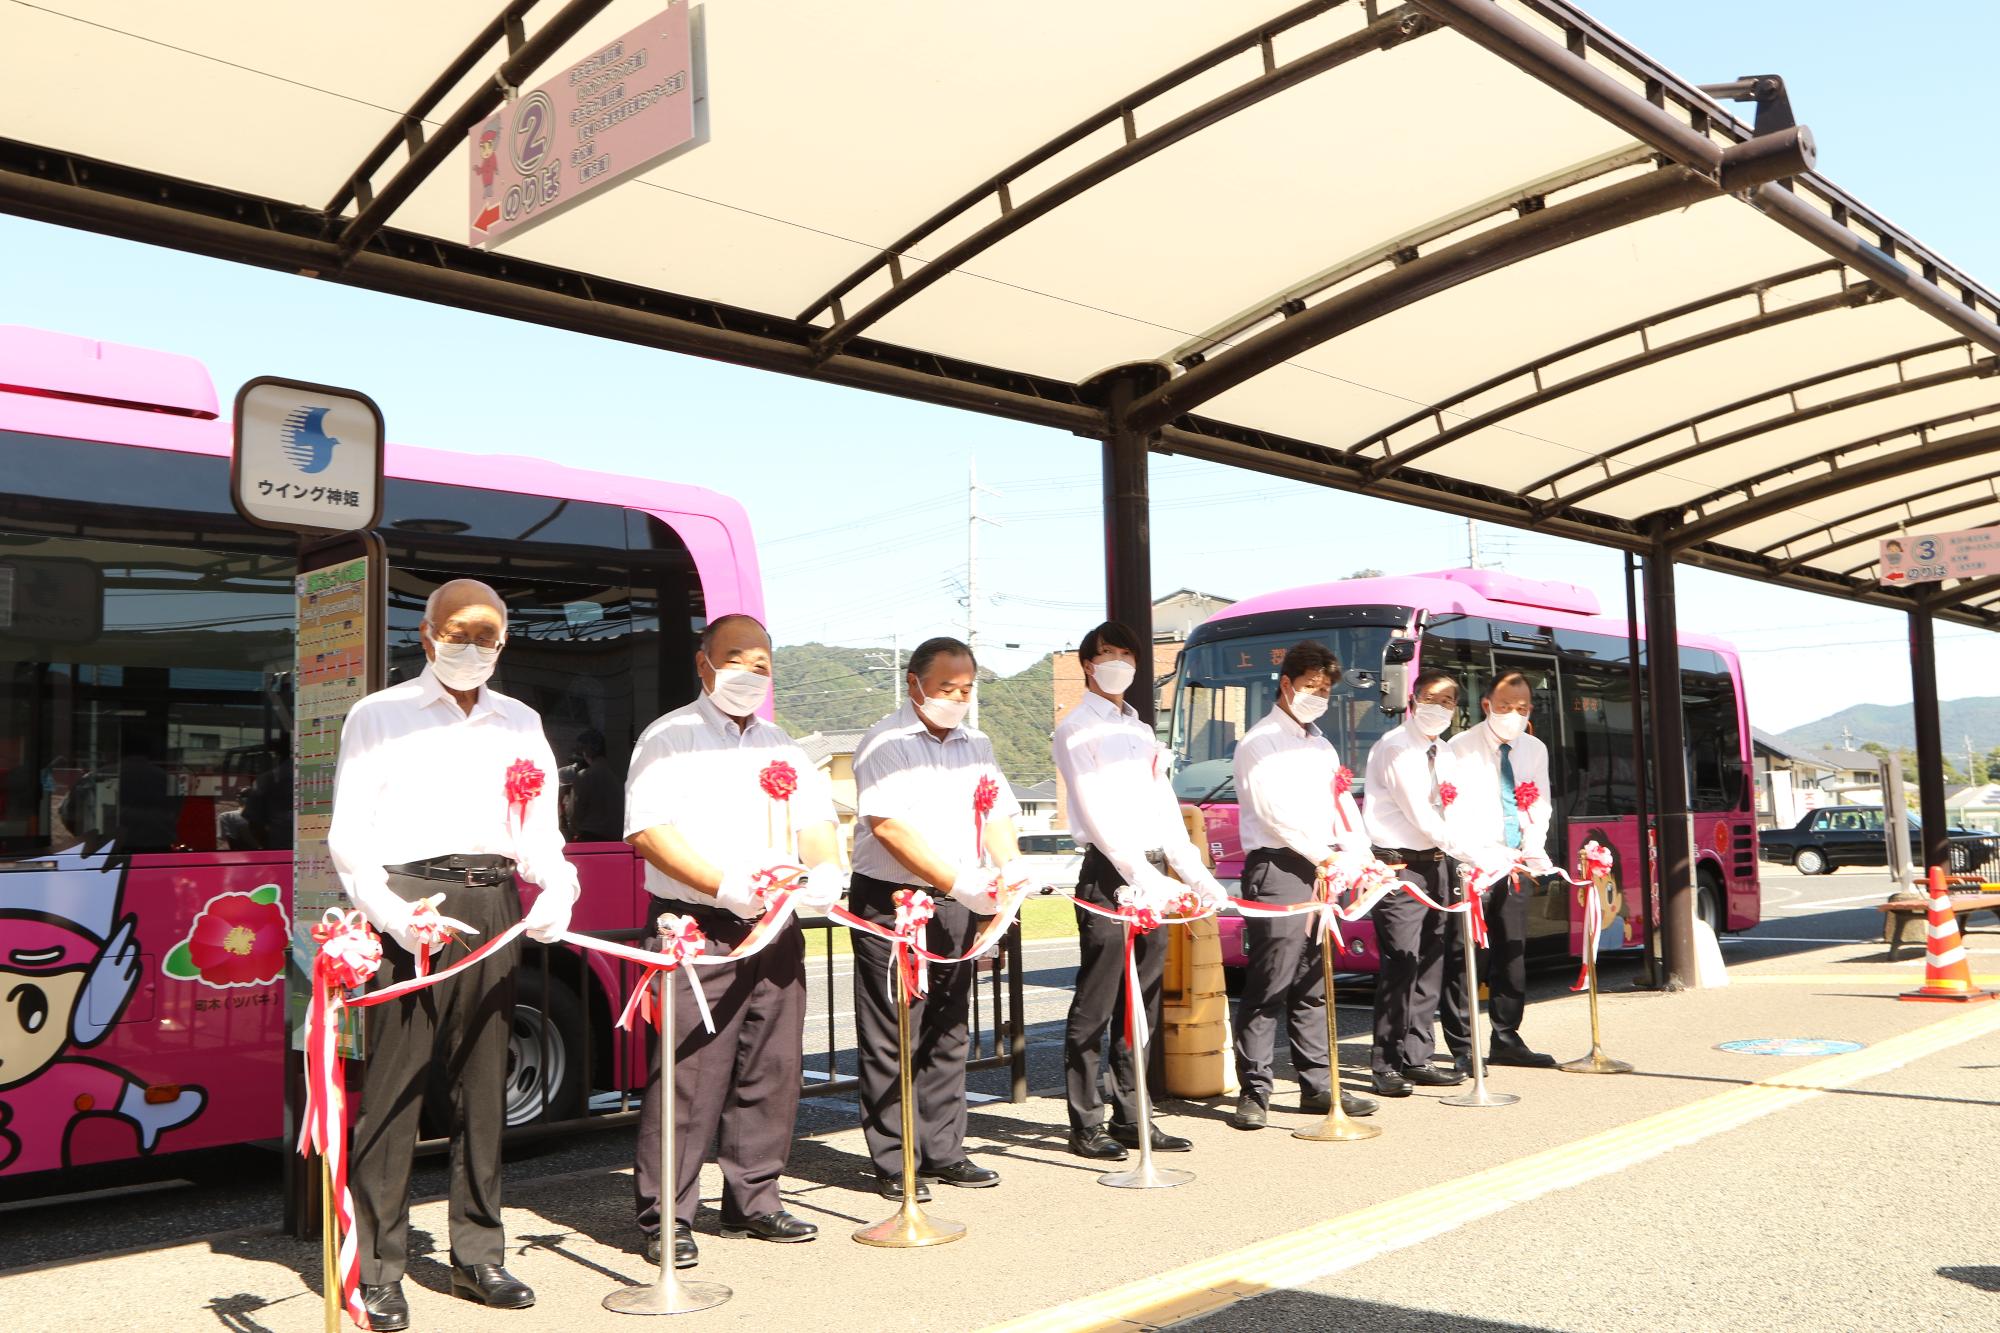 9月30日に開催された地域公共交通再編運行開始式典